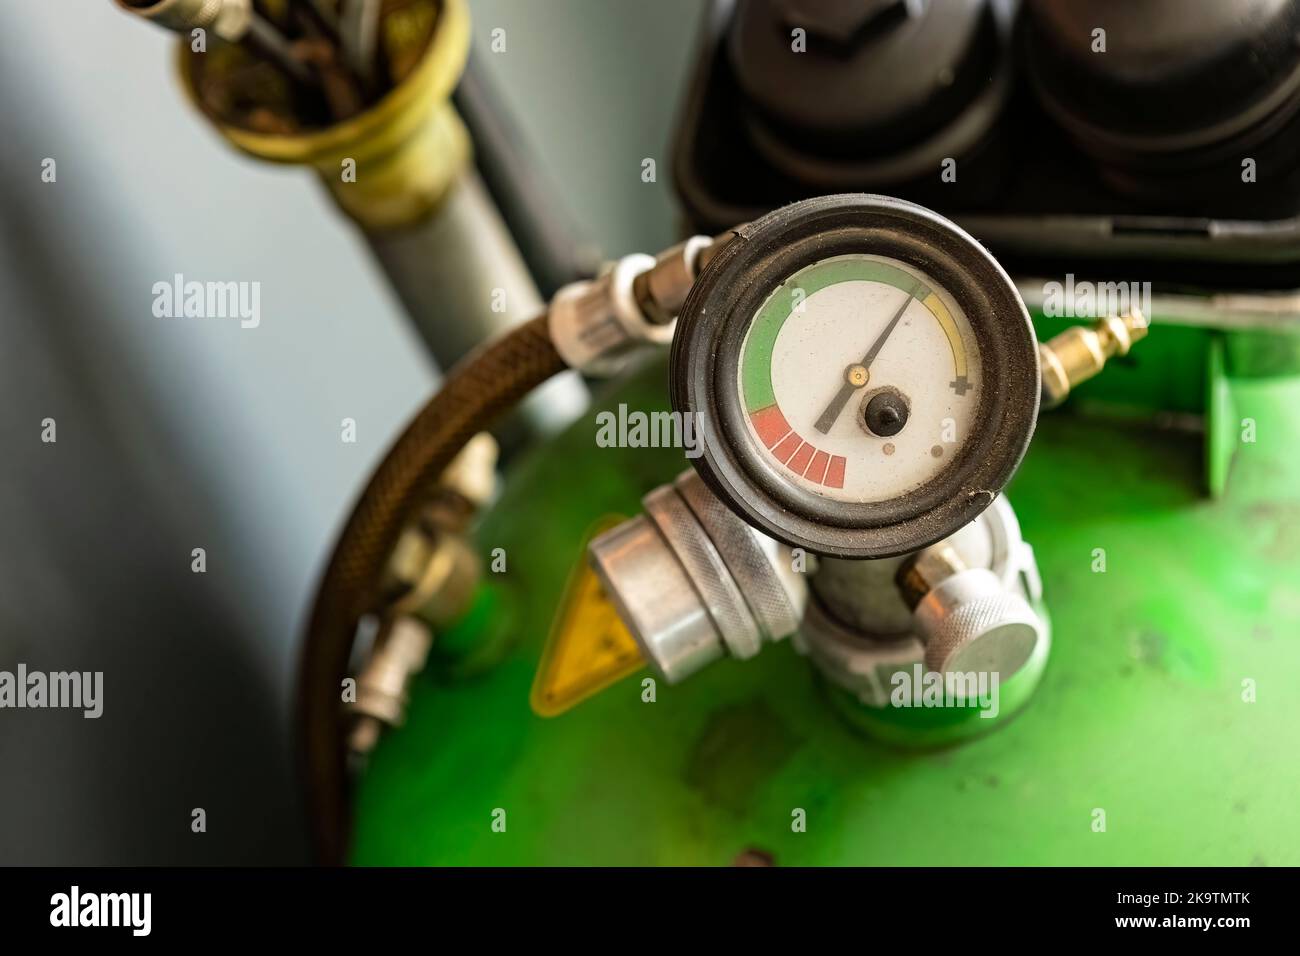 Pressure gauge detail in a mecanical workshop Stock Photo